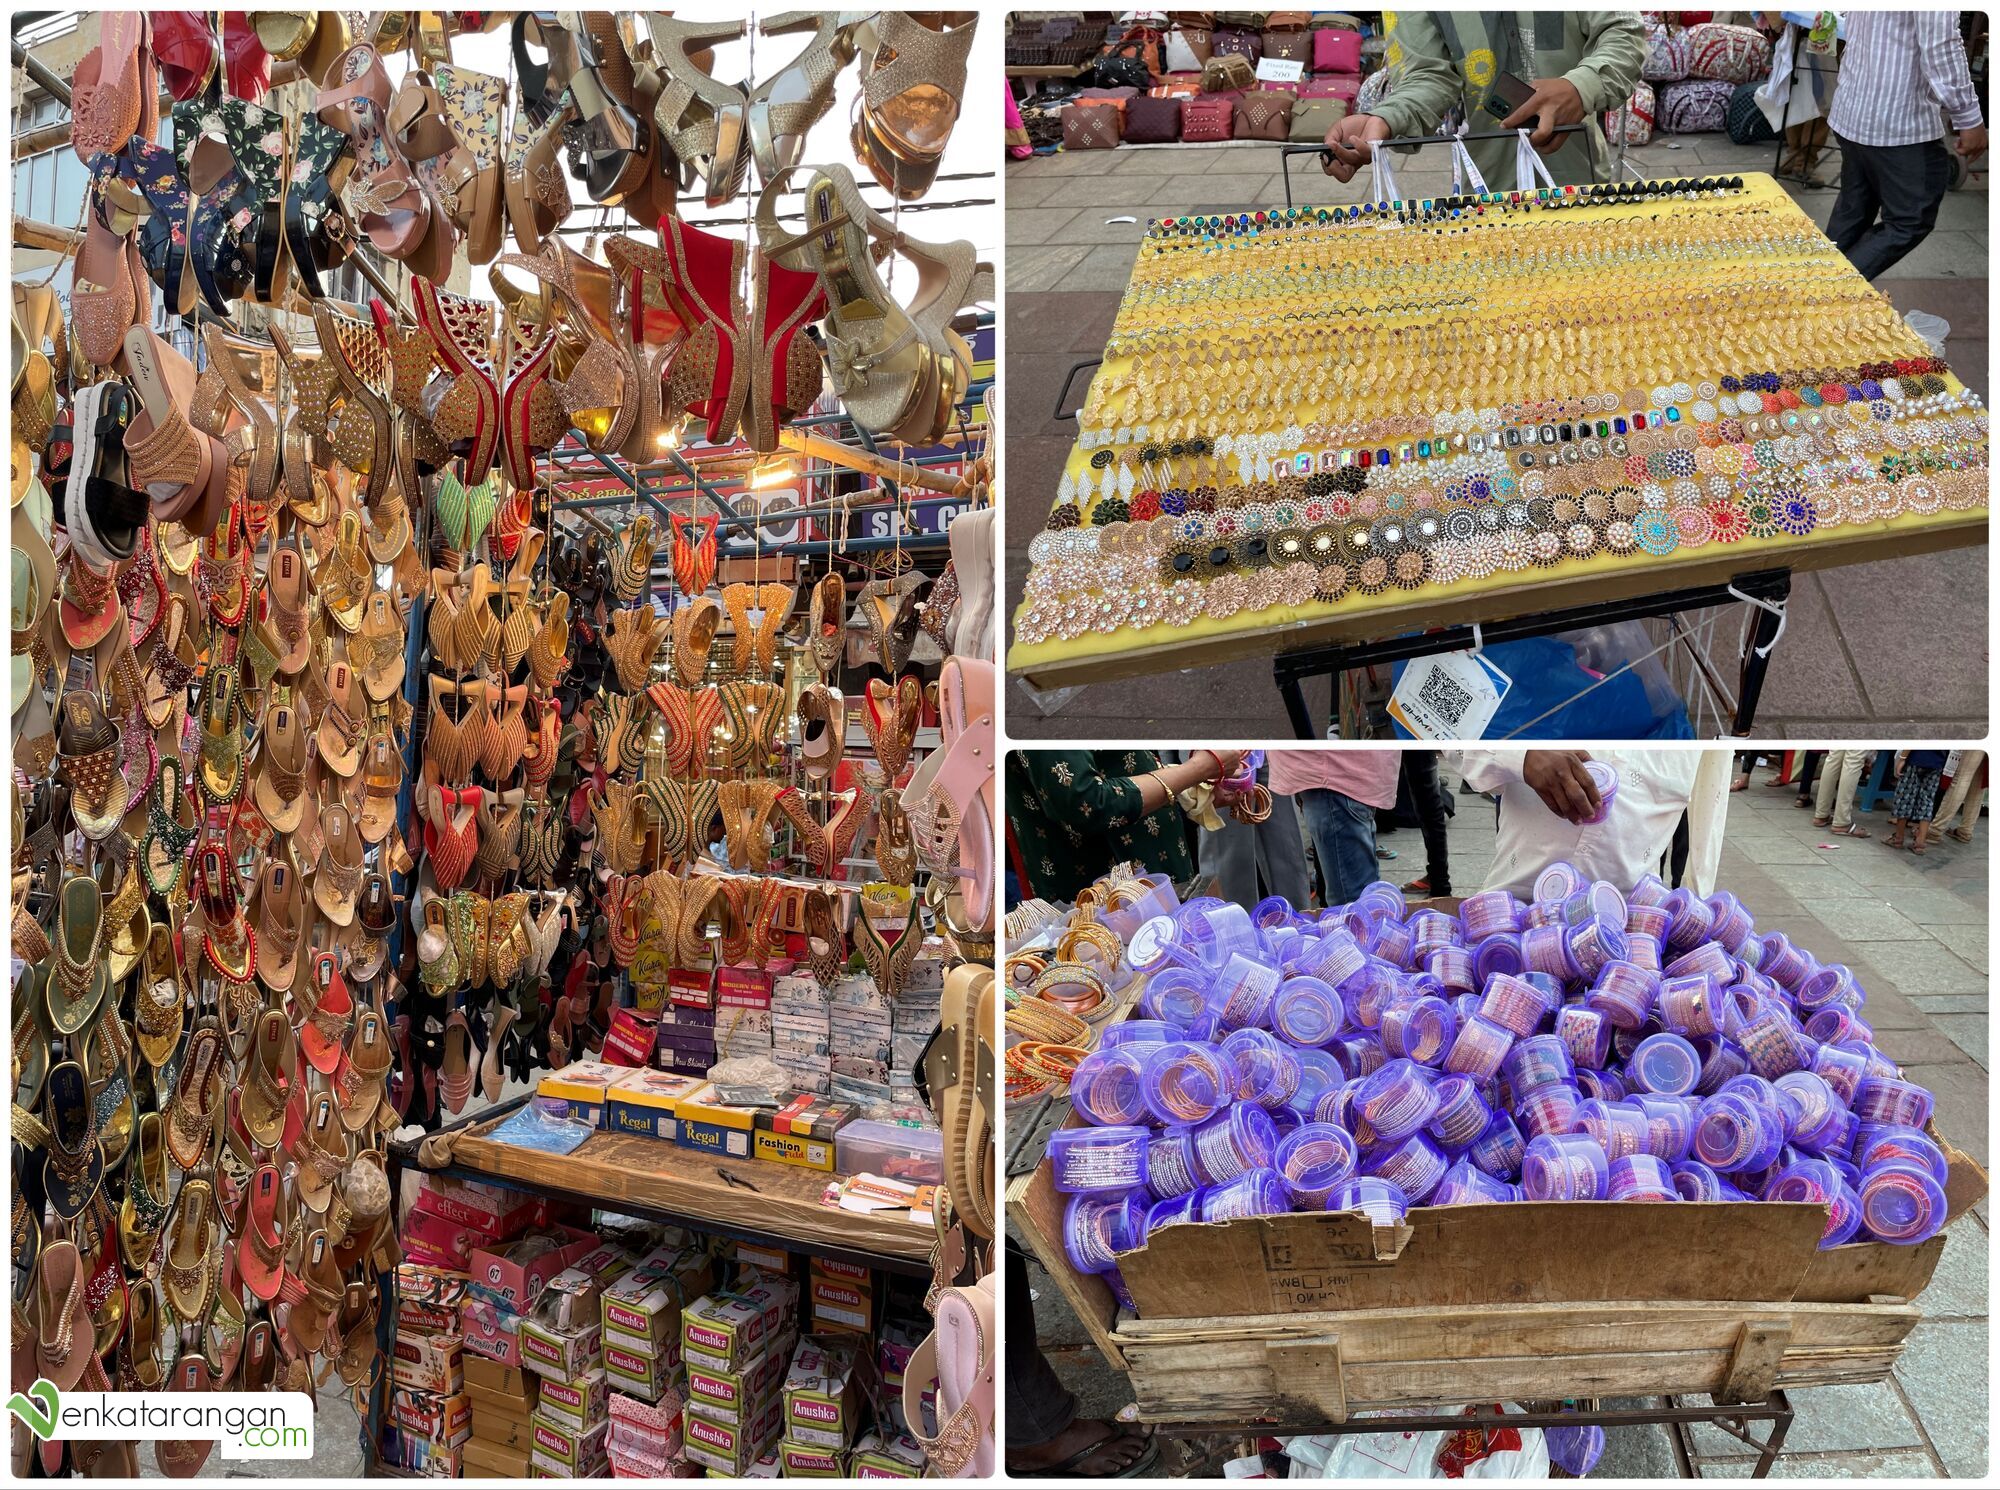 Shops near Charminar selling women bangles, earrings and slippers 